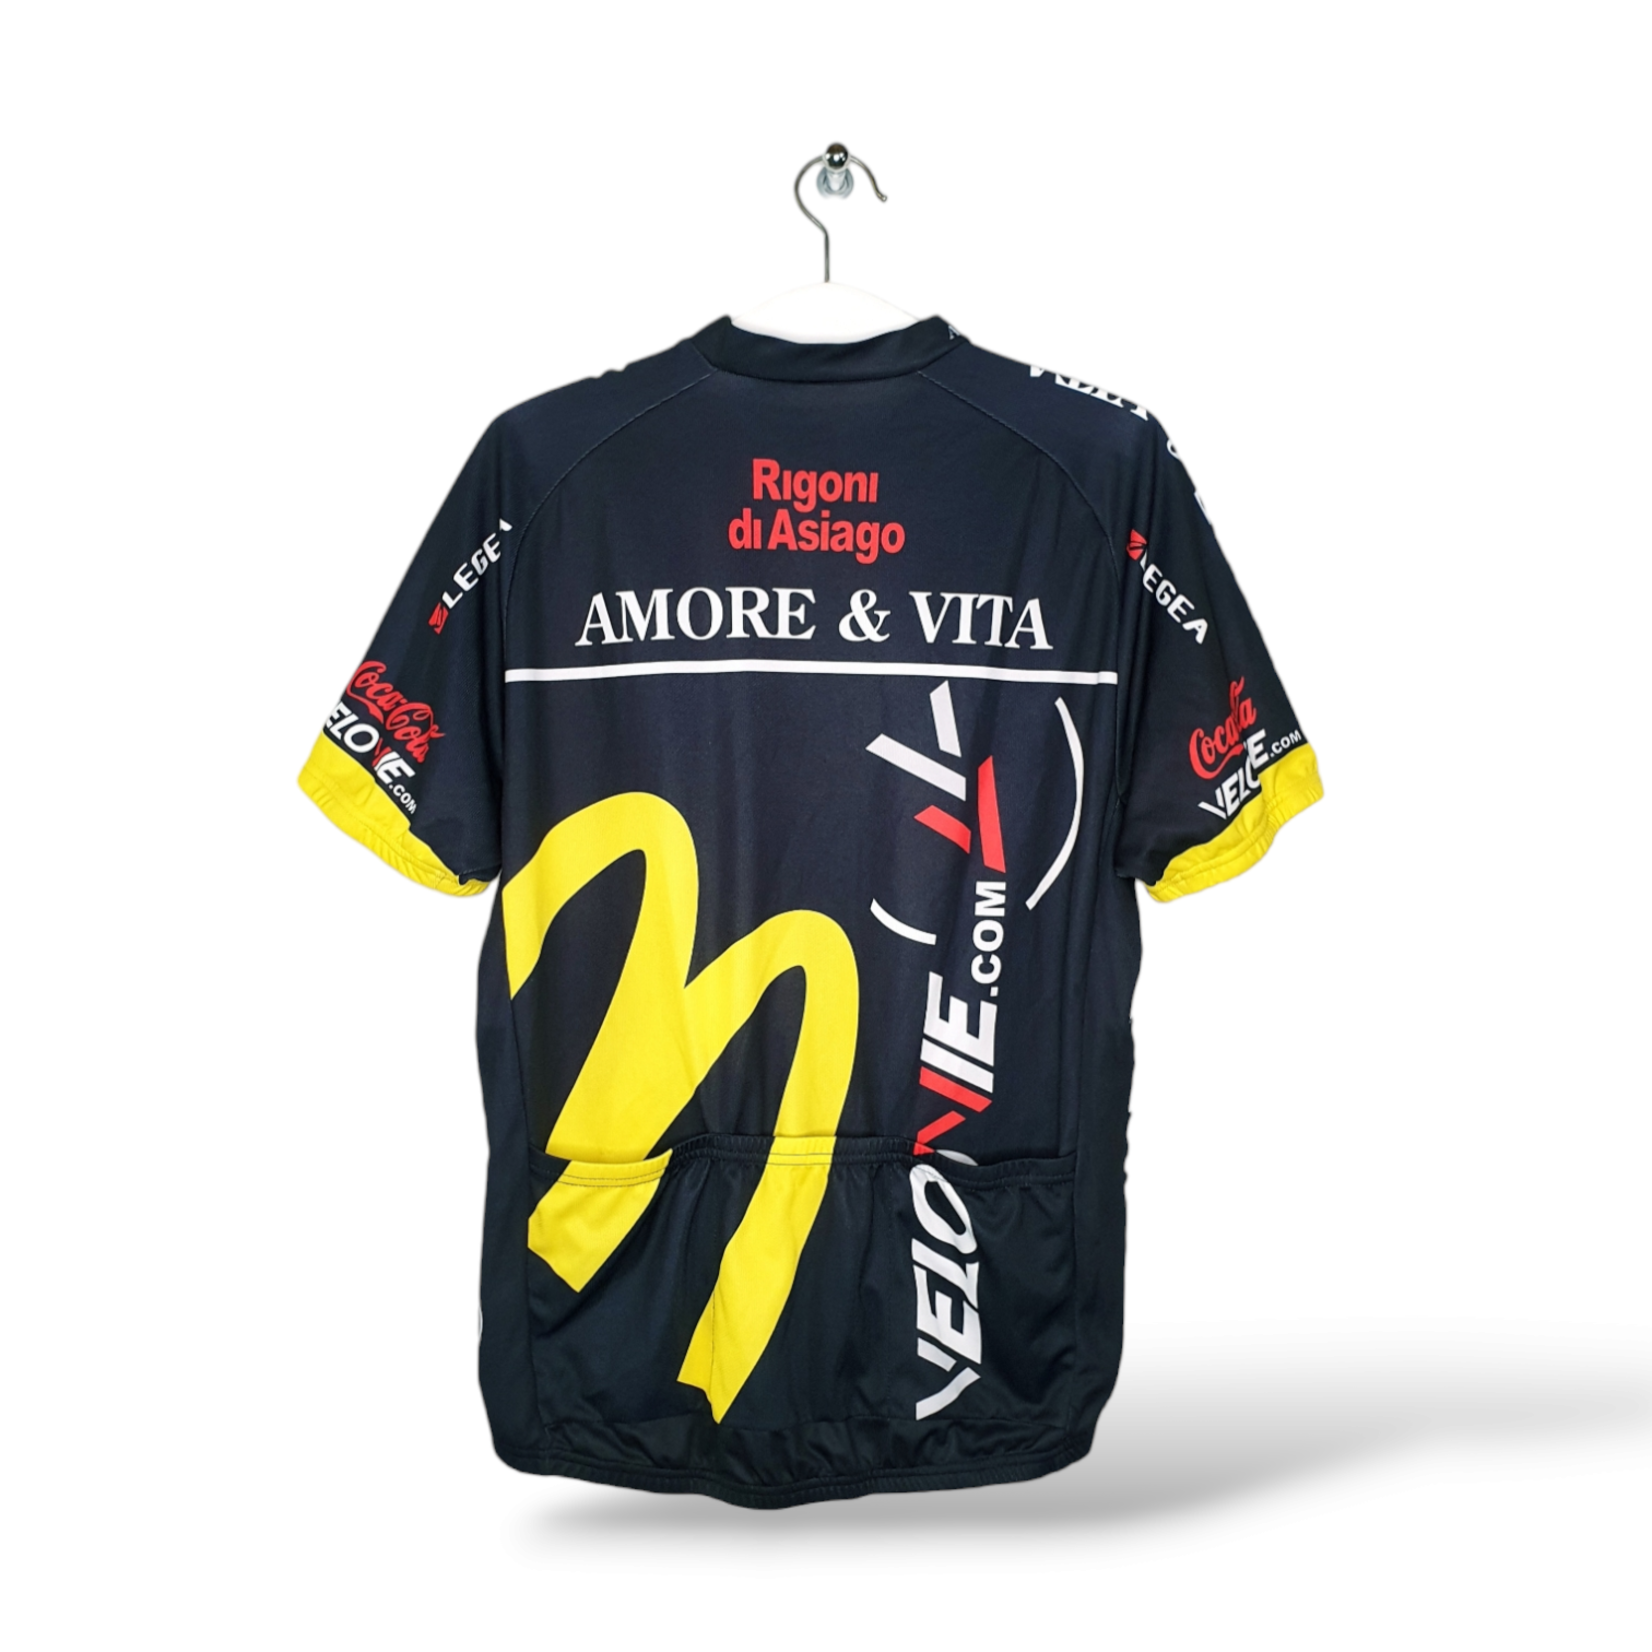 Legea Original Legea vintage cycling shirt Amore & Vita -McDonald's 2009